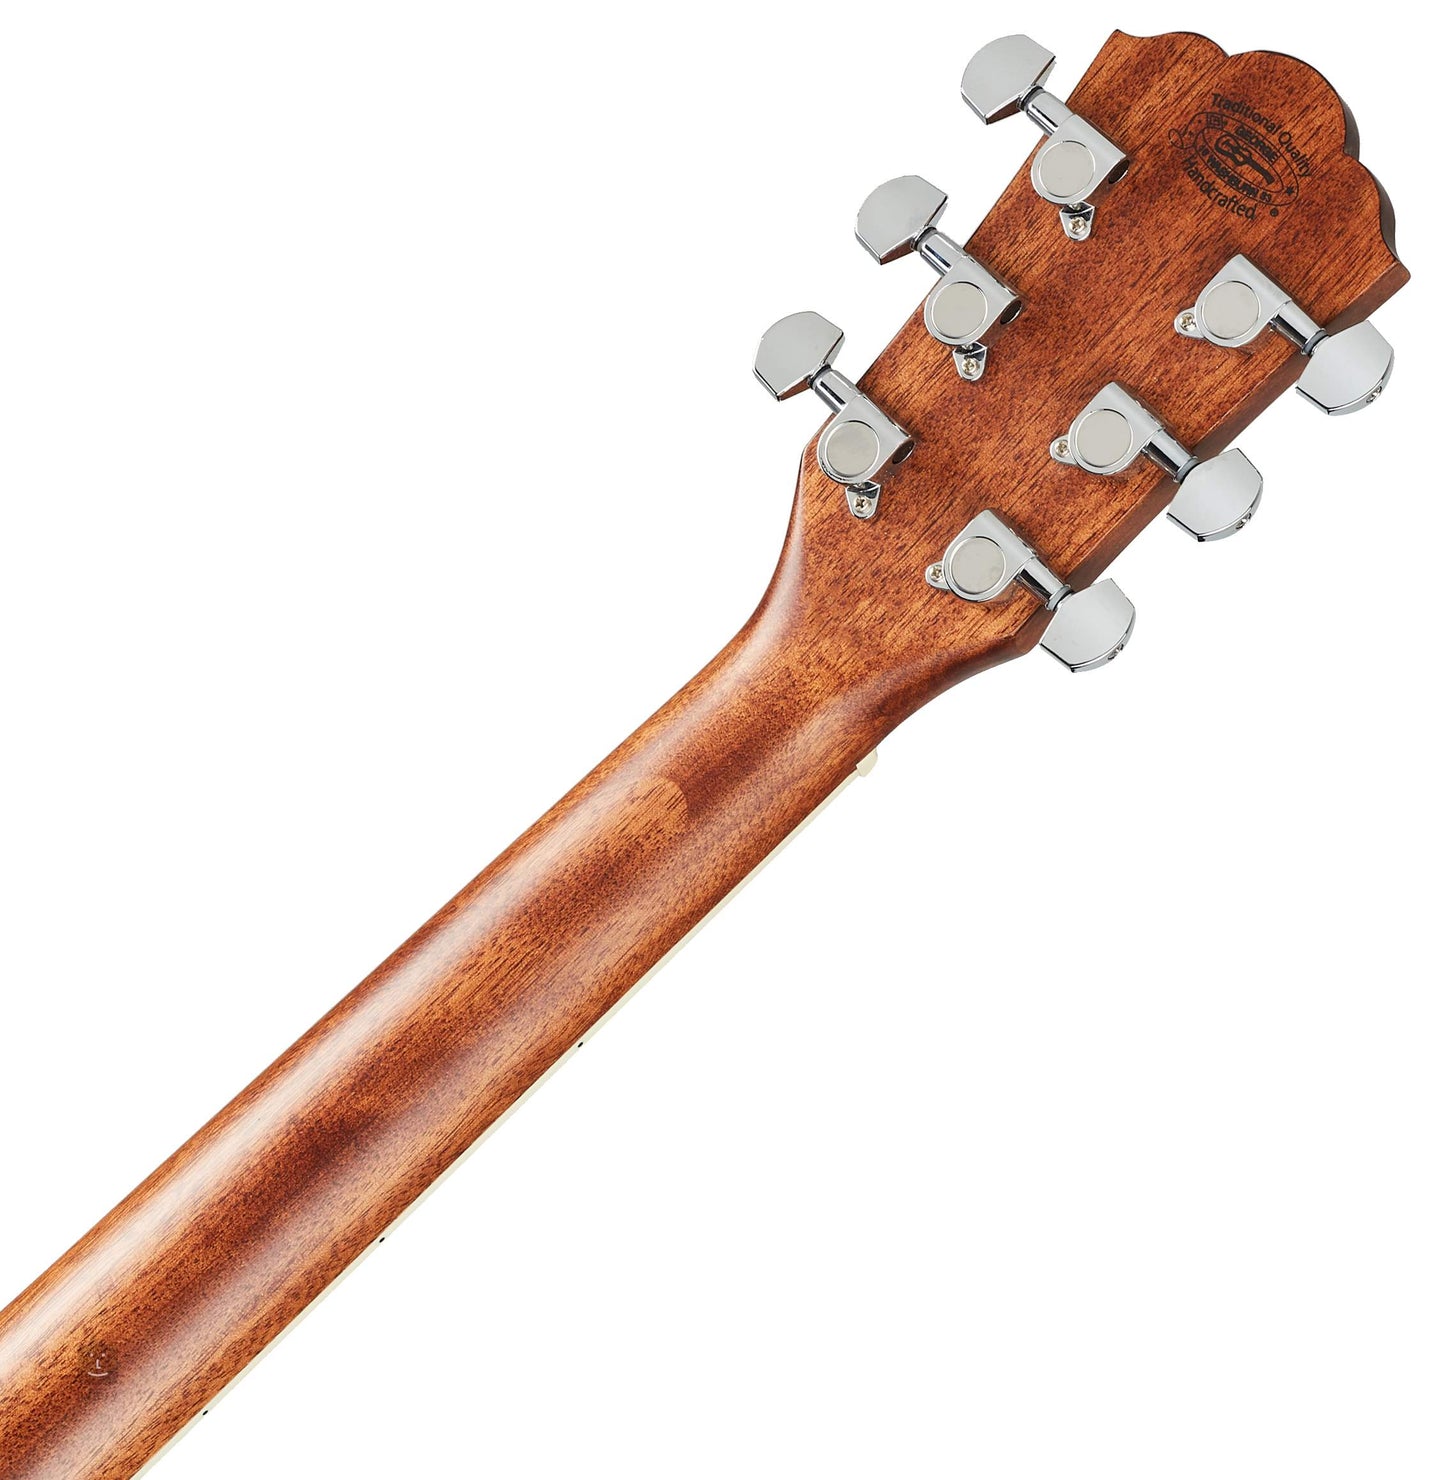 Washburn HG12S-O Acoustic Guitar